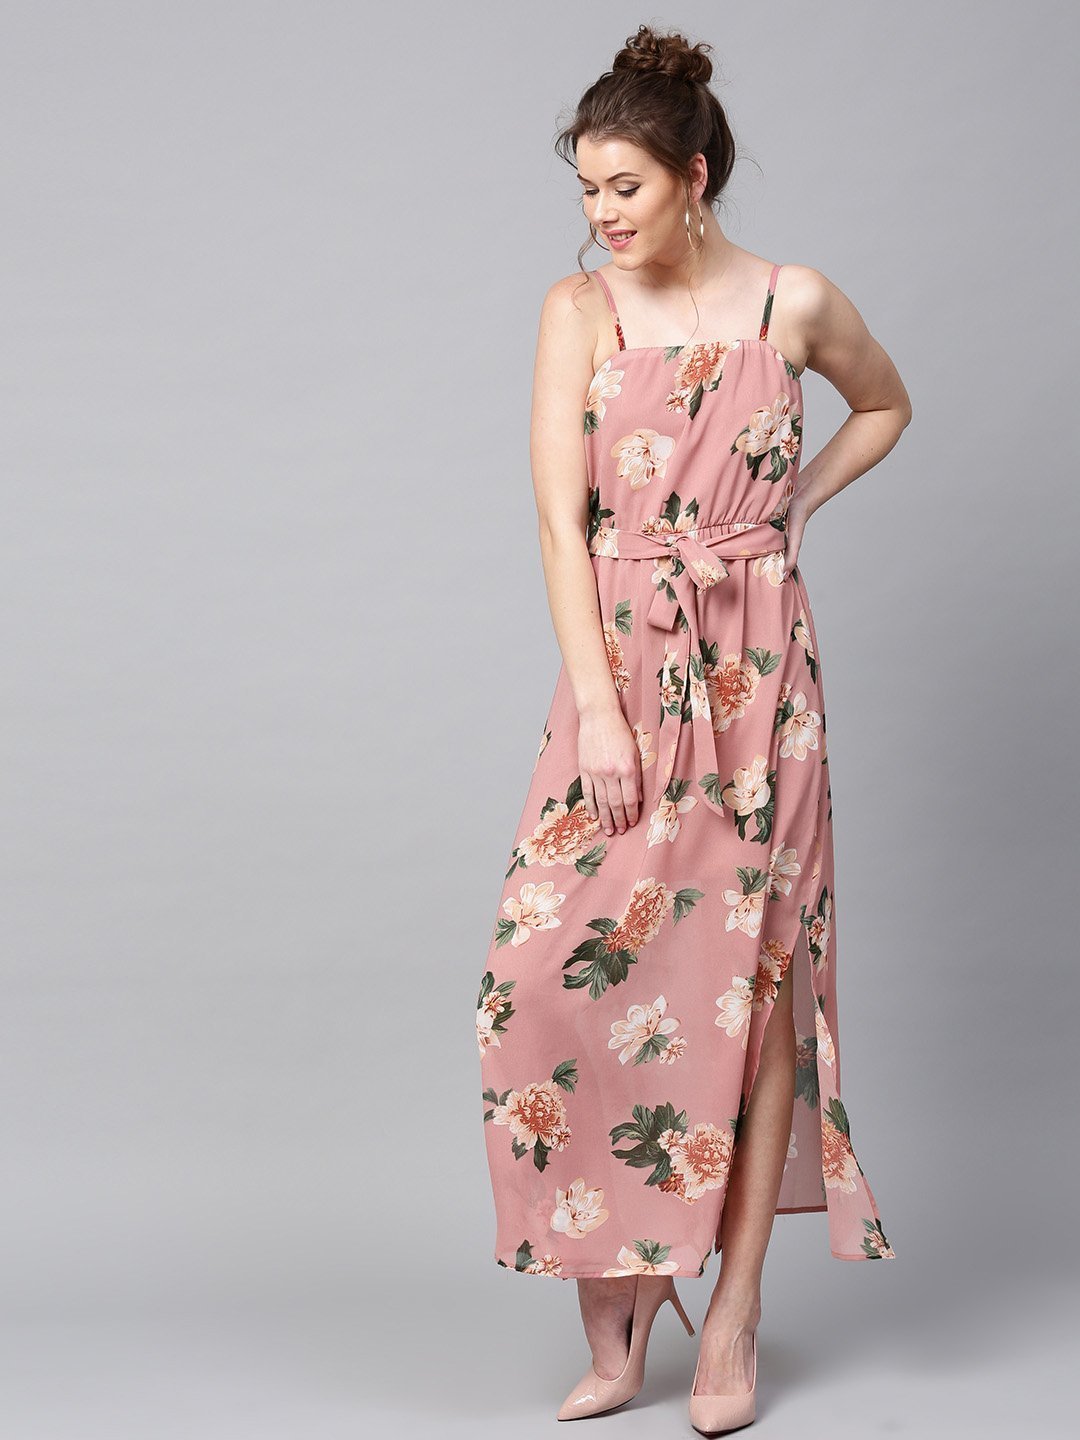 Dress Star - Dress - Floral Printed Maxi Dress - Dusty Pink And Green - 11518762643502-SASSAFRAS-Women-Pink-Printed-Maxi-Dress-8201518762643321-3_2dfe7582-b6e8-4f14-9641-f4a9c0eafc46